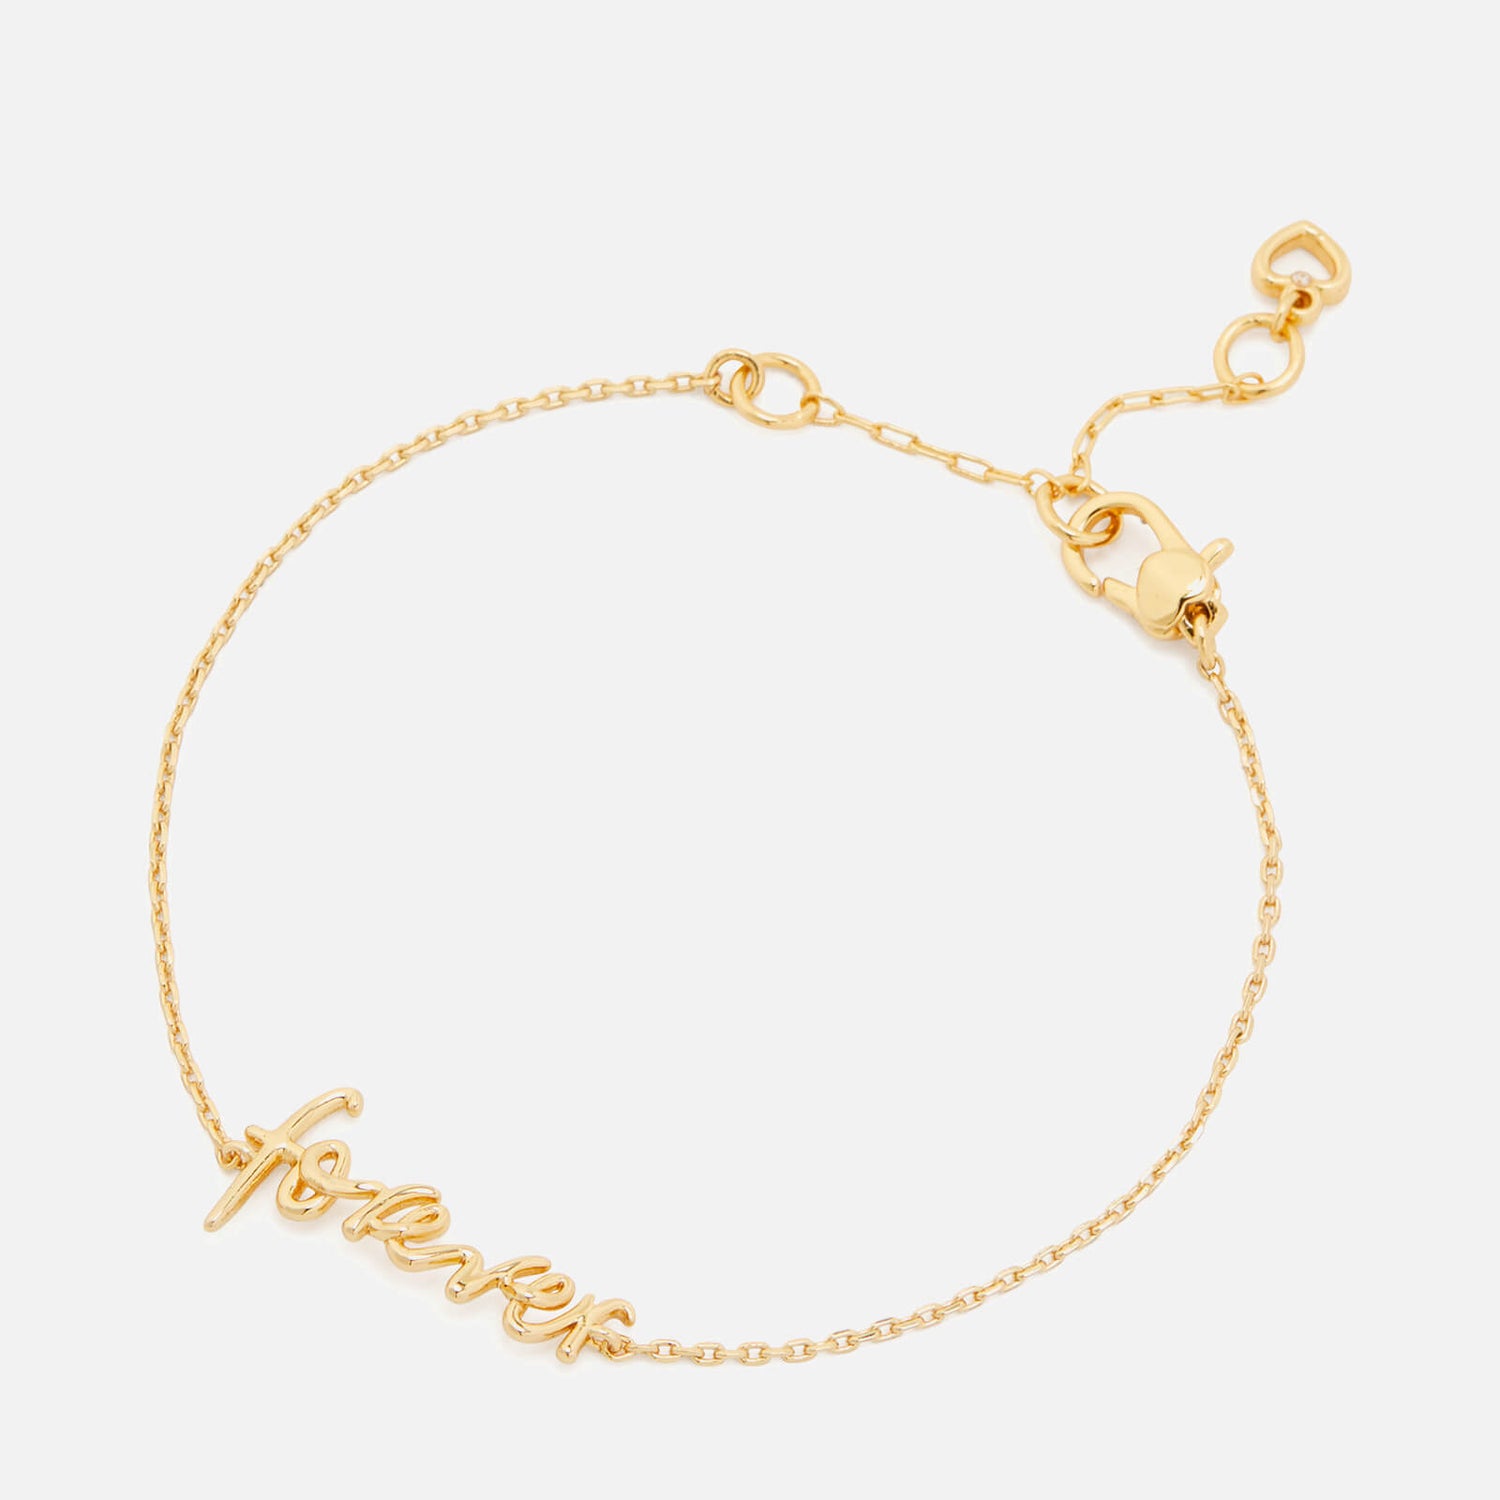 Kate Spade New York Say Yes Forever Gold-Tone Bracelet